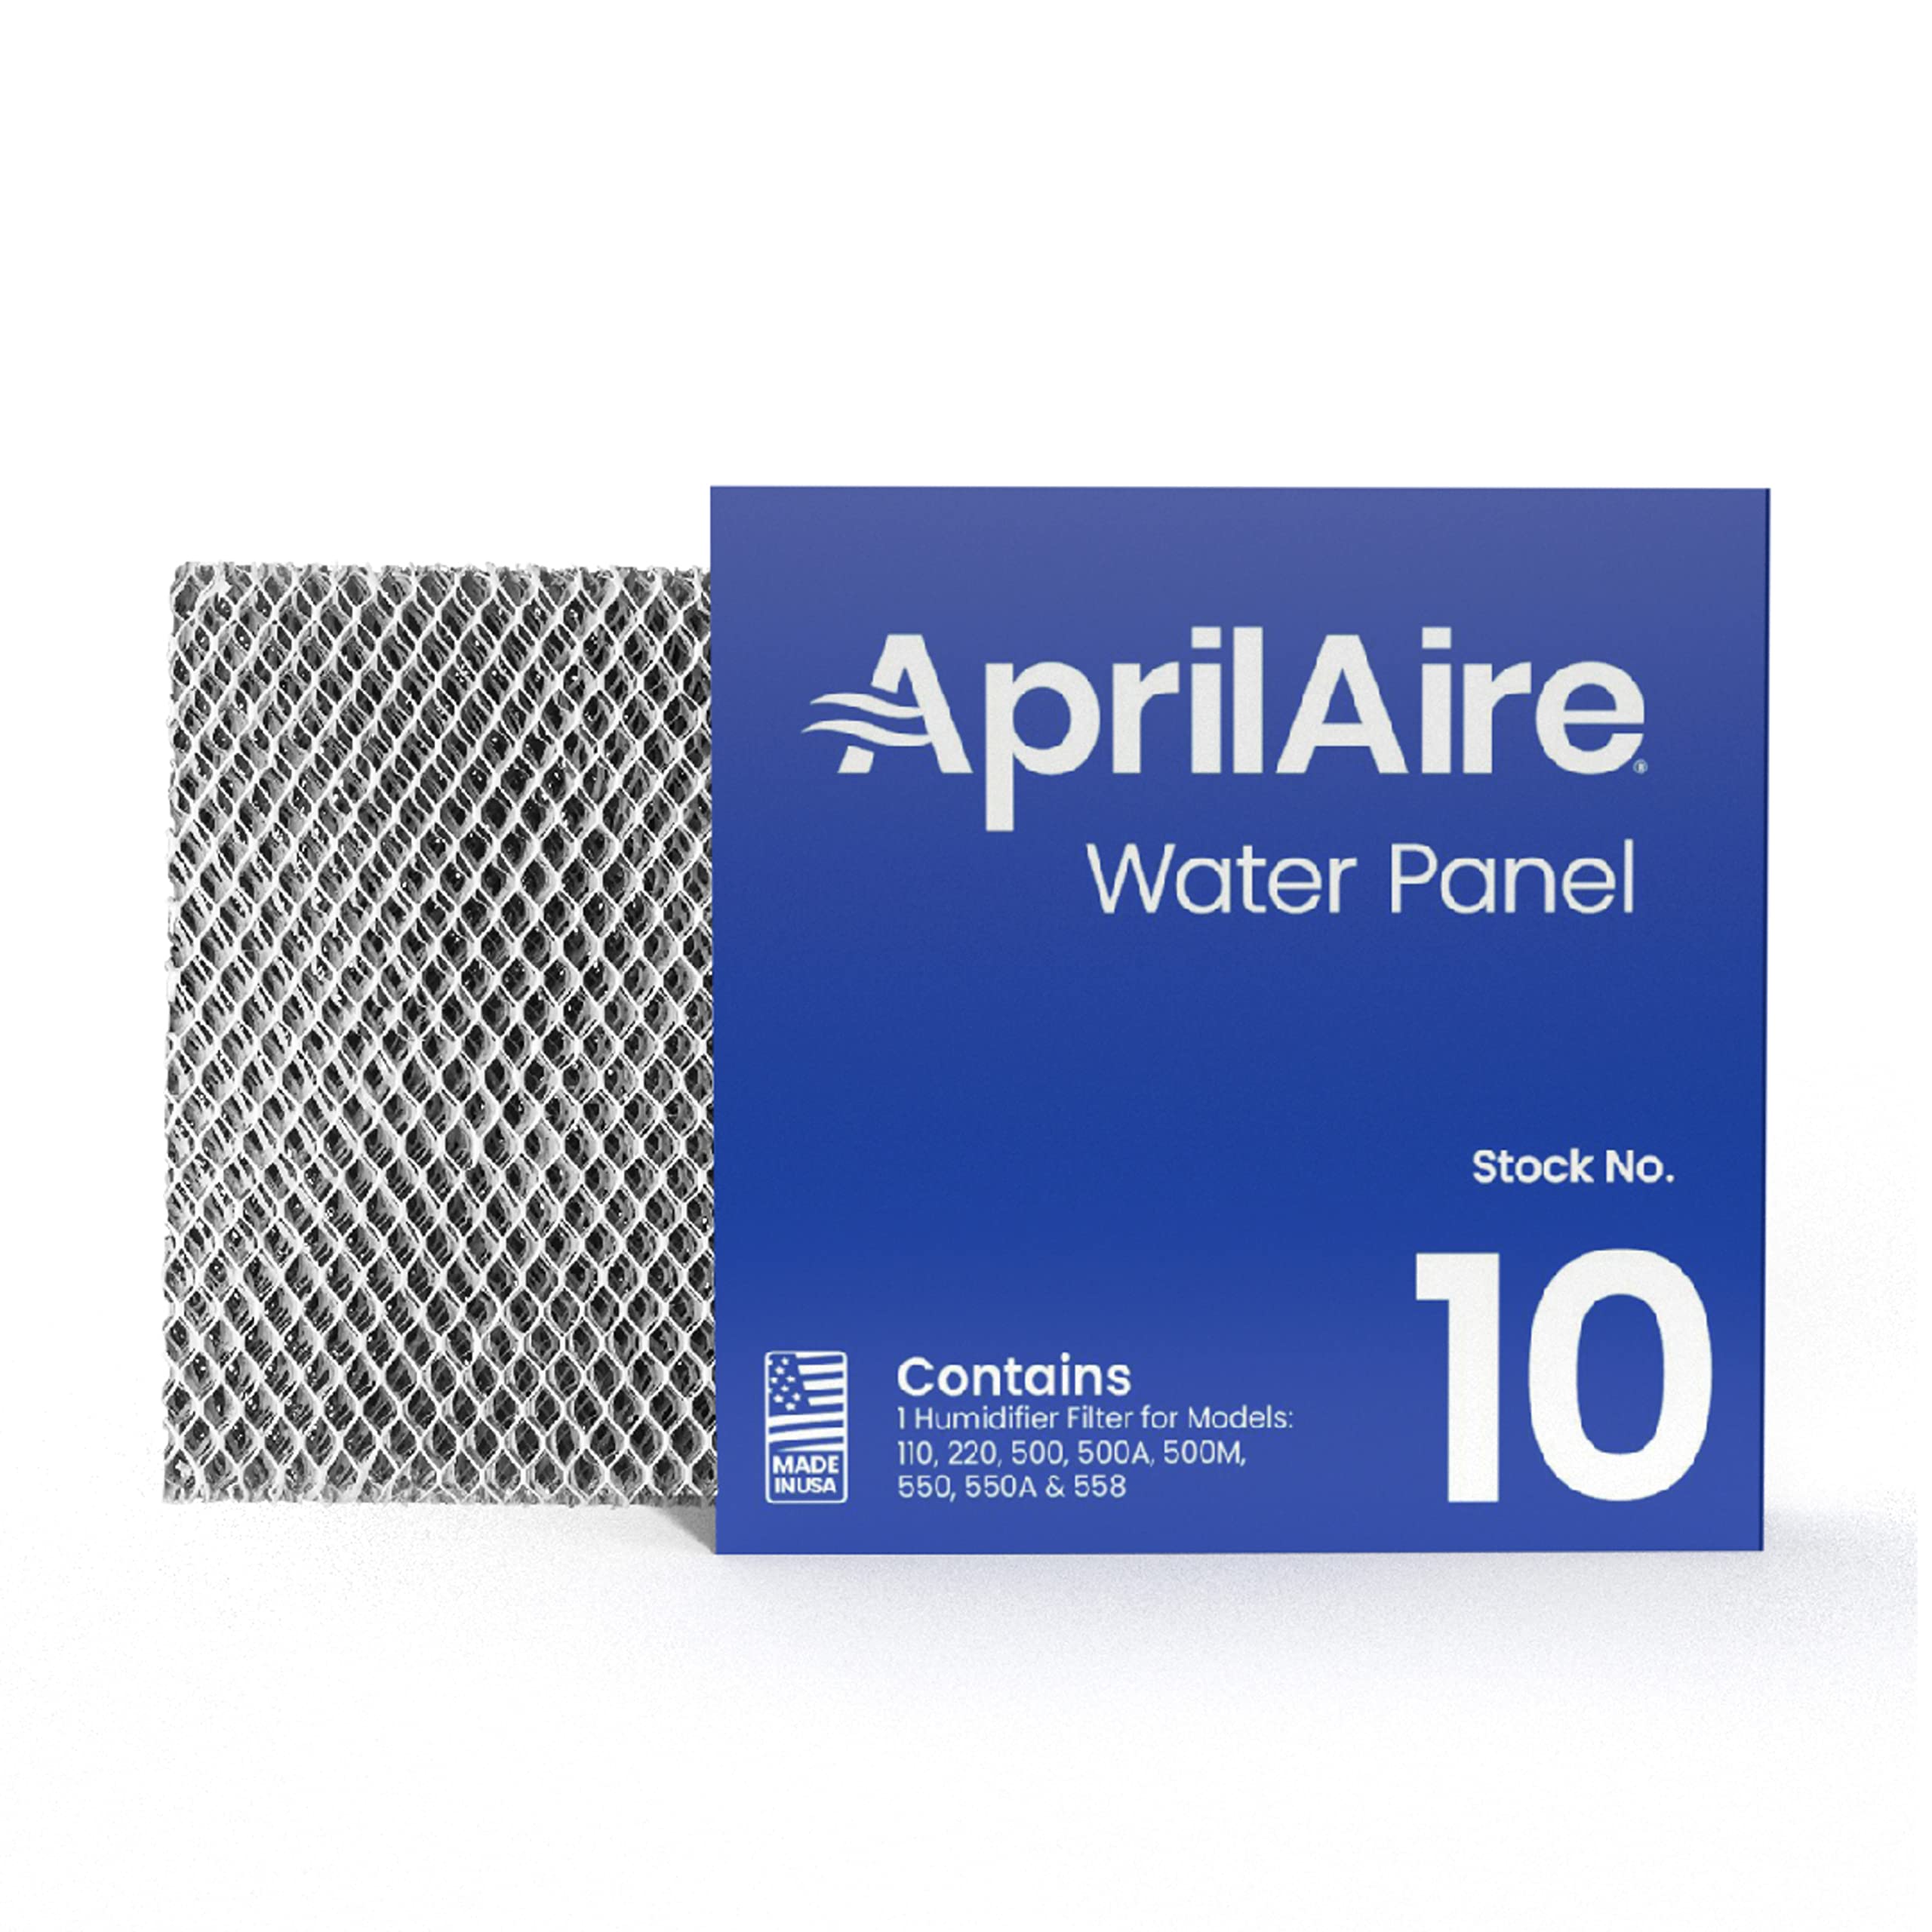 Aprilaire - 10 A1 10 替换水面板，适用于全屋加湿器型号 110、220、500、500A、500M、550、558